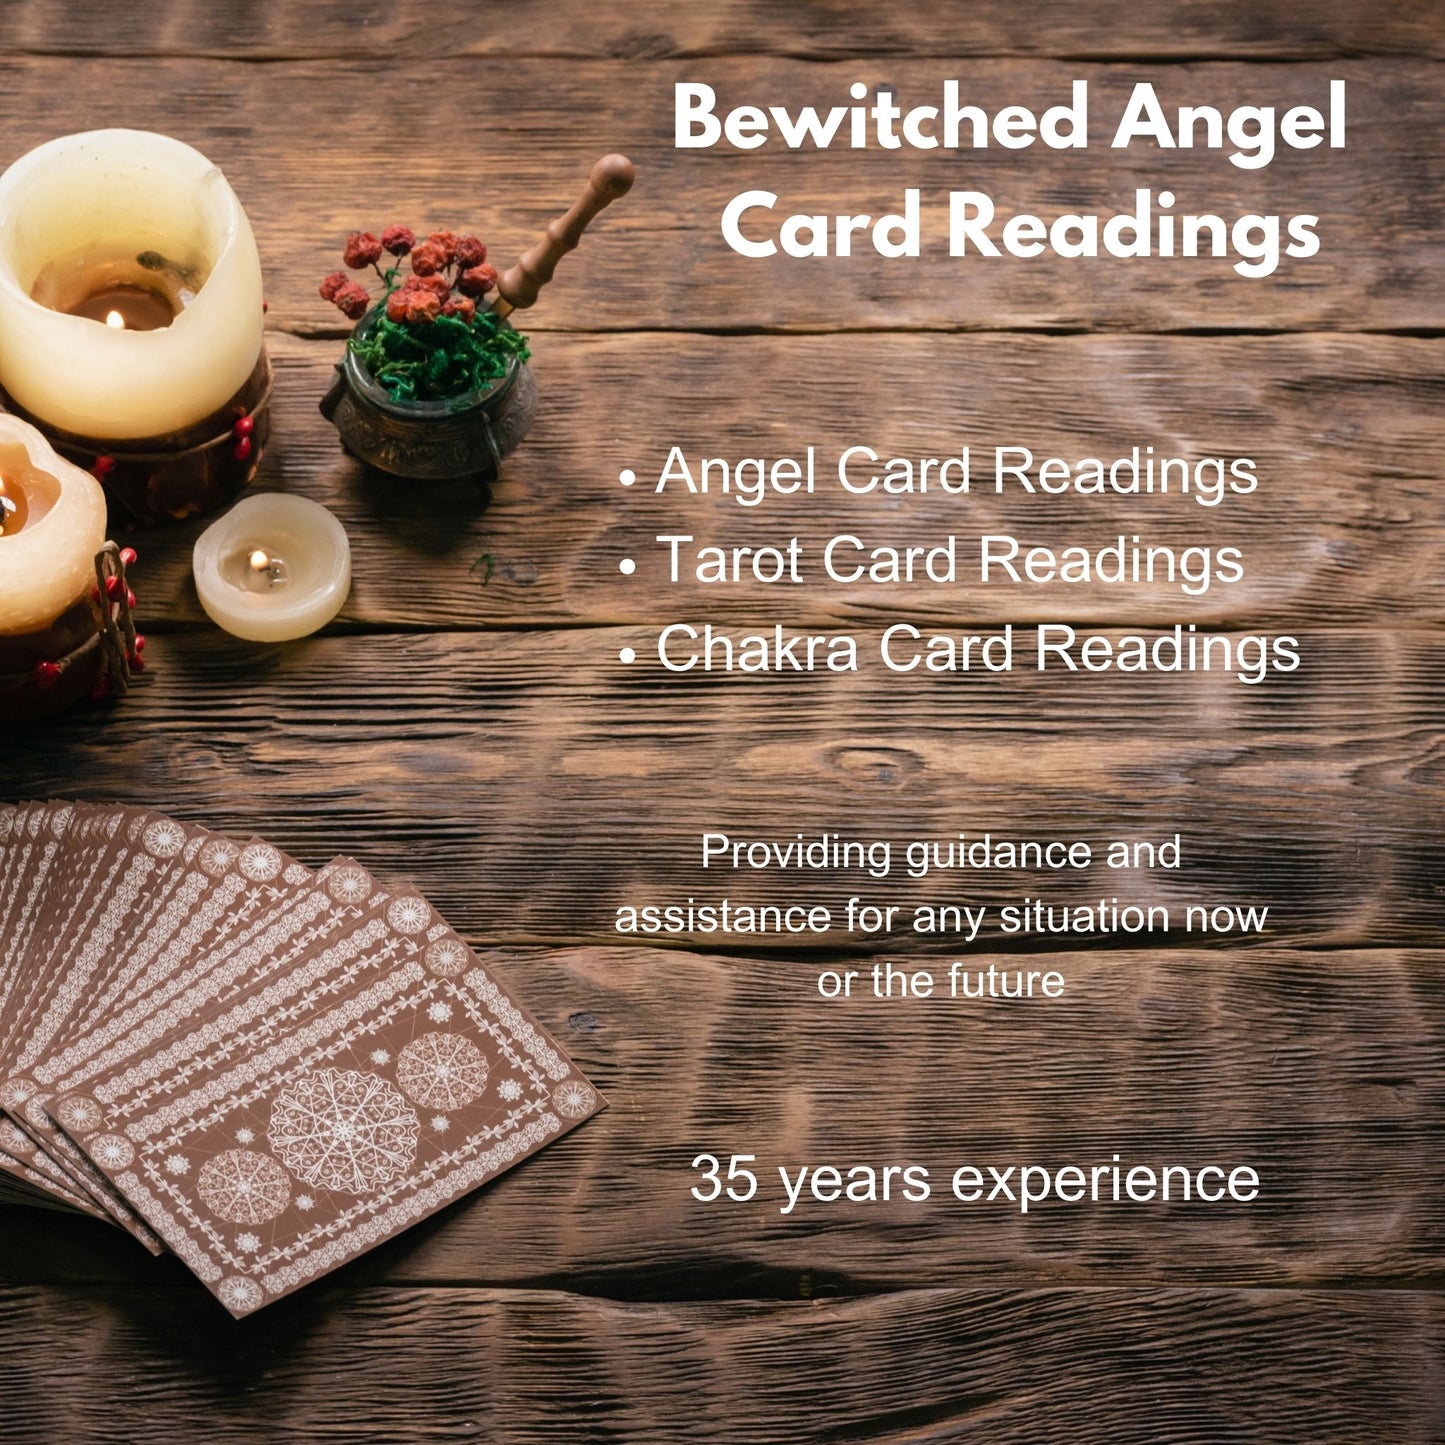 Angel Card Readings